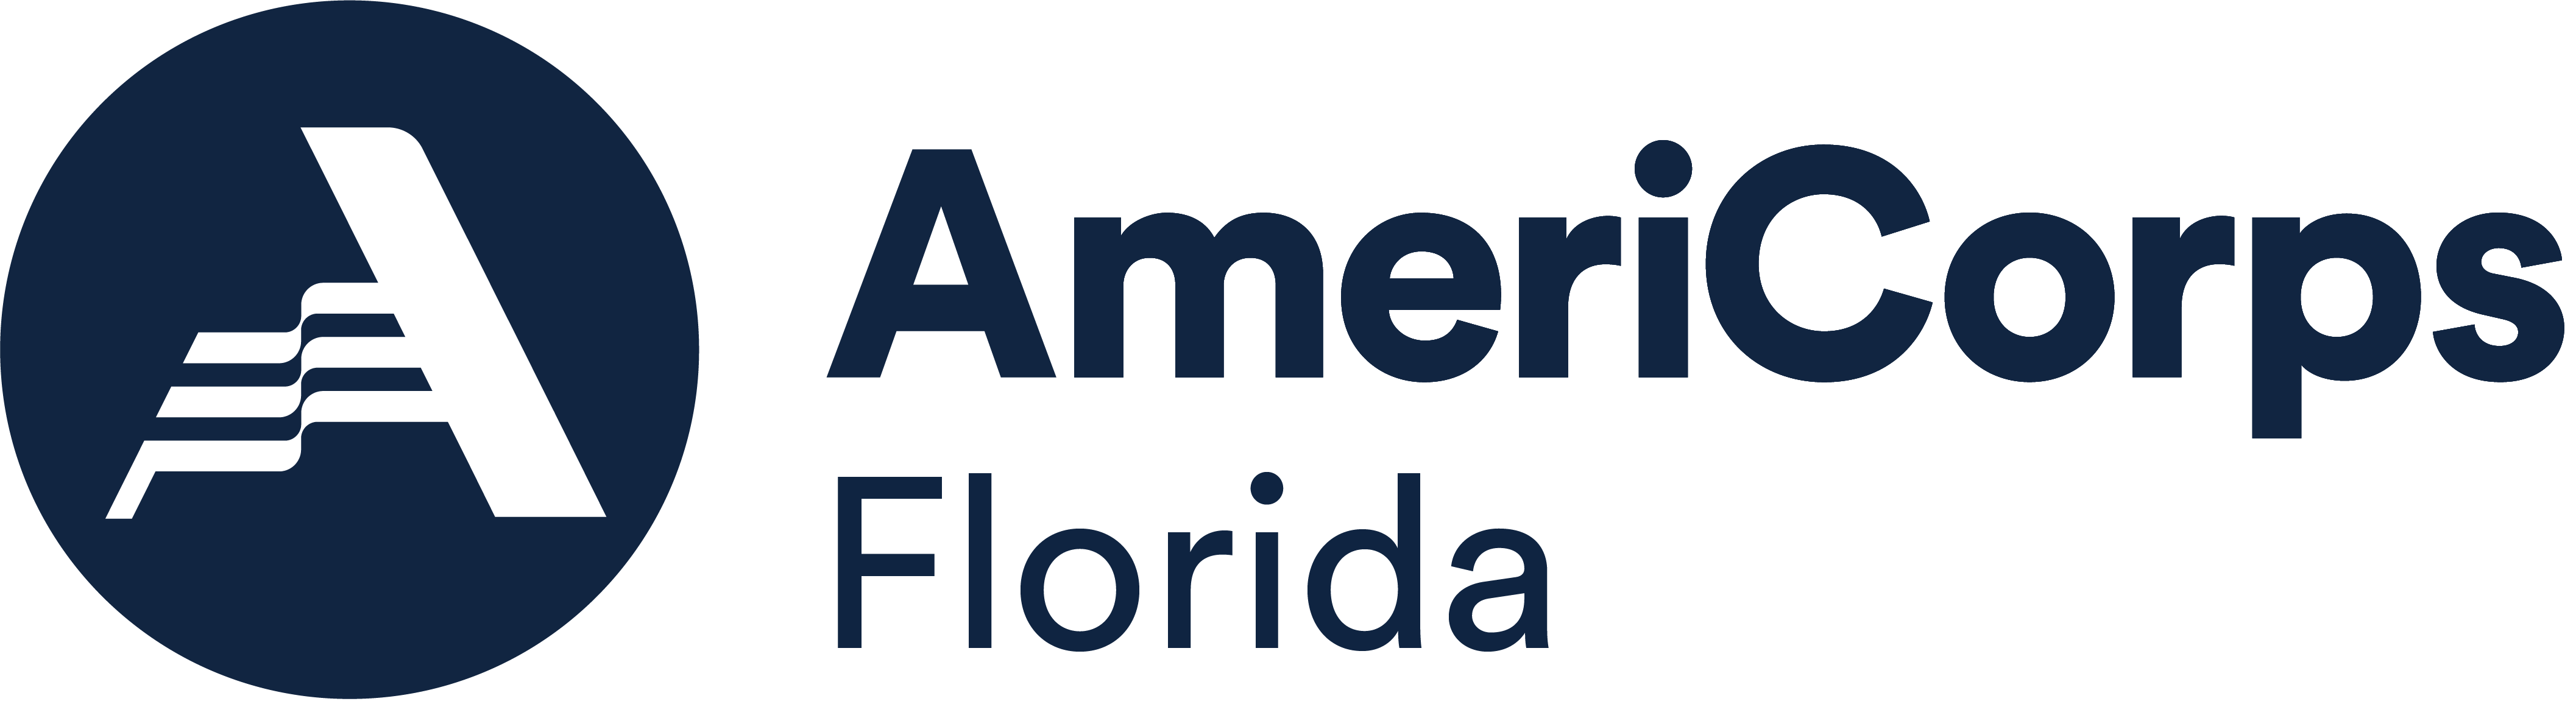 AmeriCorps-Florida-Navy-Horizontal_PNG